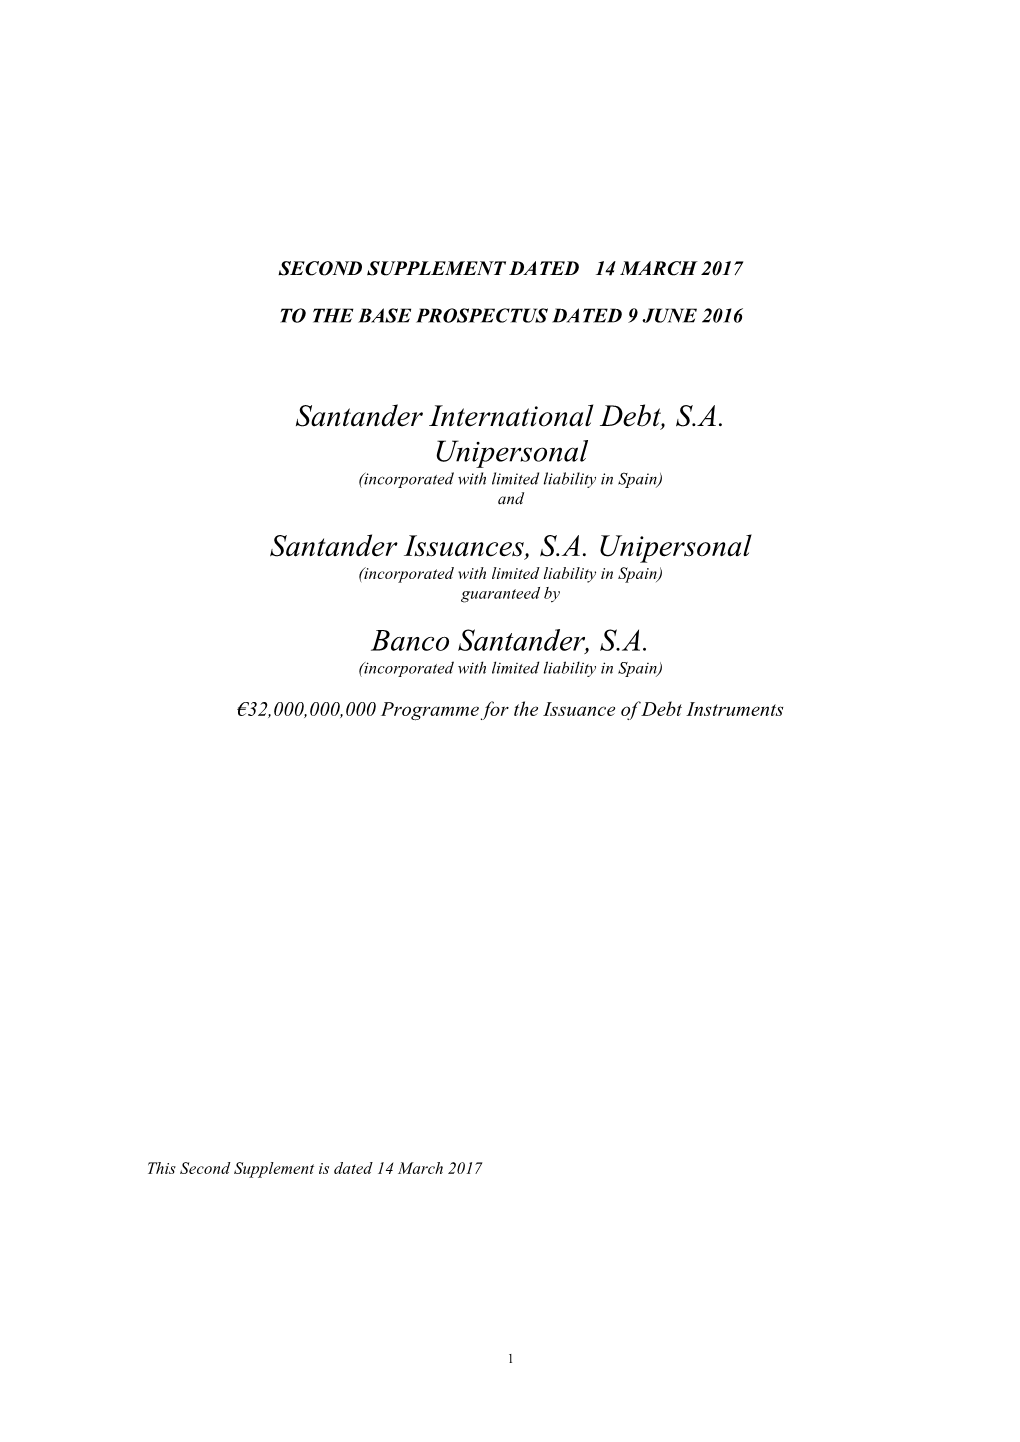 Santander International Debt, S.A. Unipersonal Santander Issuances